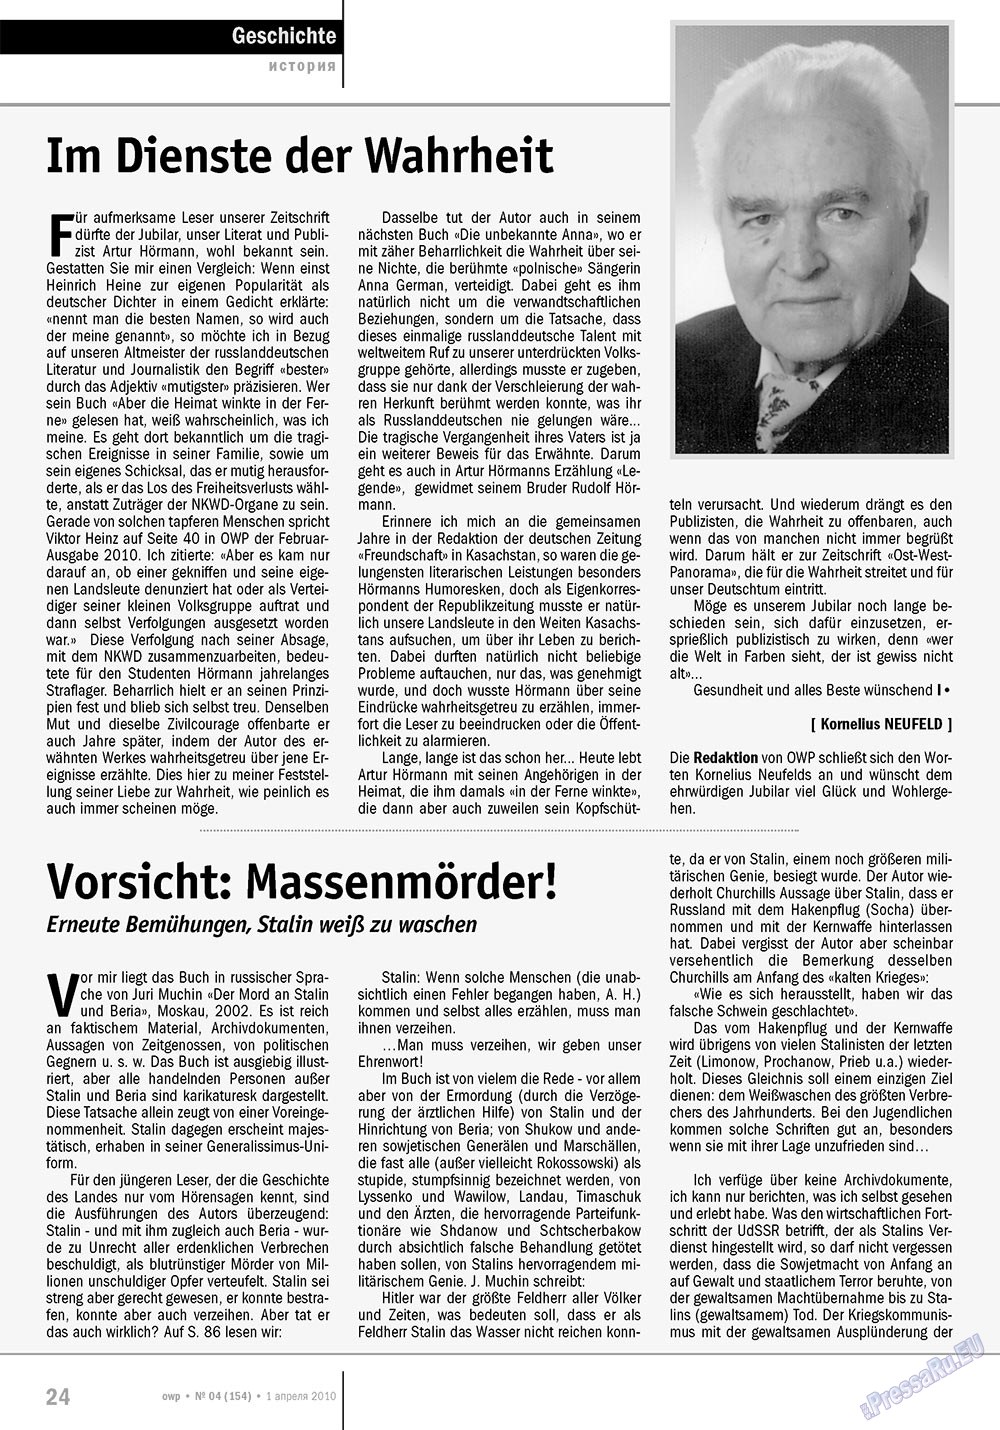 Ost-West Panorama, журнал. 2010 №4 стр.24